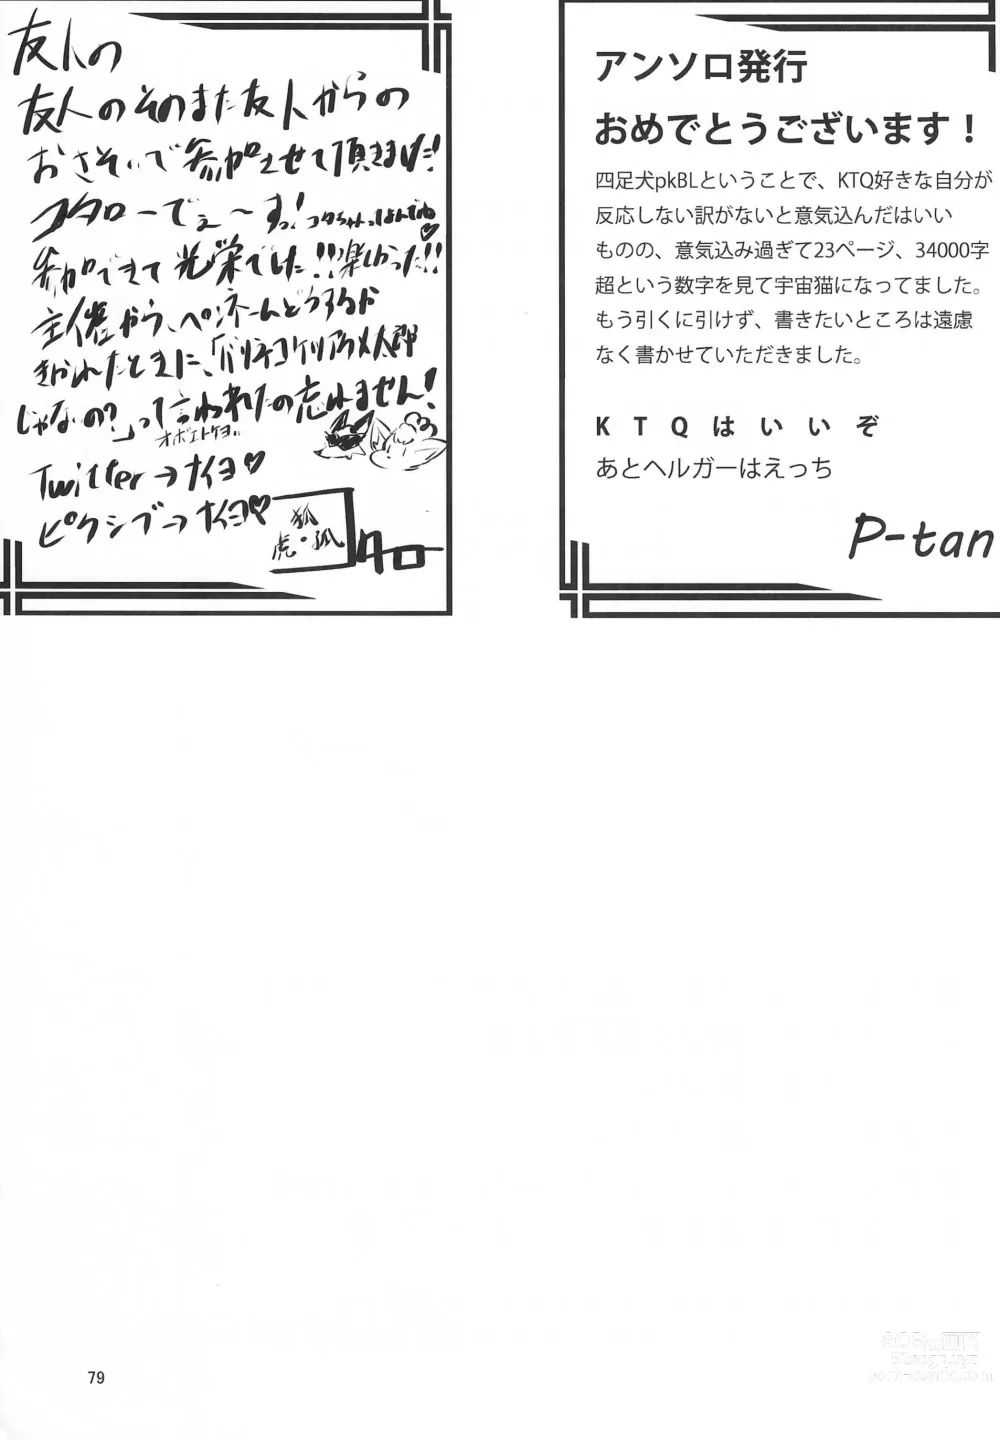 Page 79 of doujinshi Yotsu Ashi BL Anthology K9S